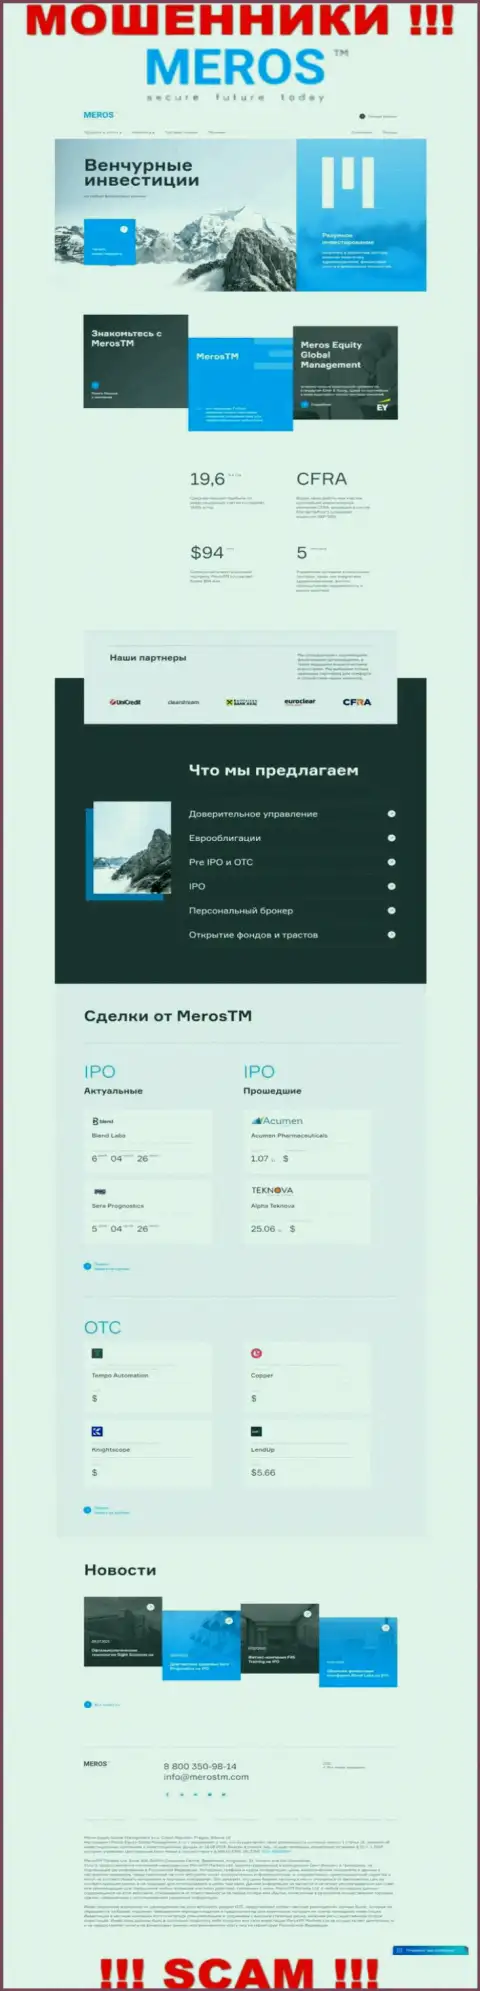 Обзор интернет-сервиса жуликов MerosTM